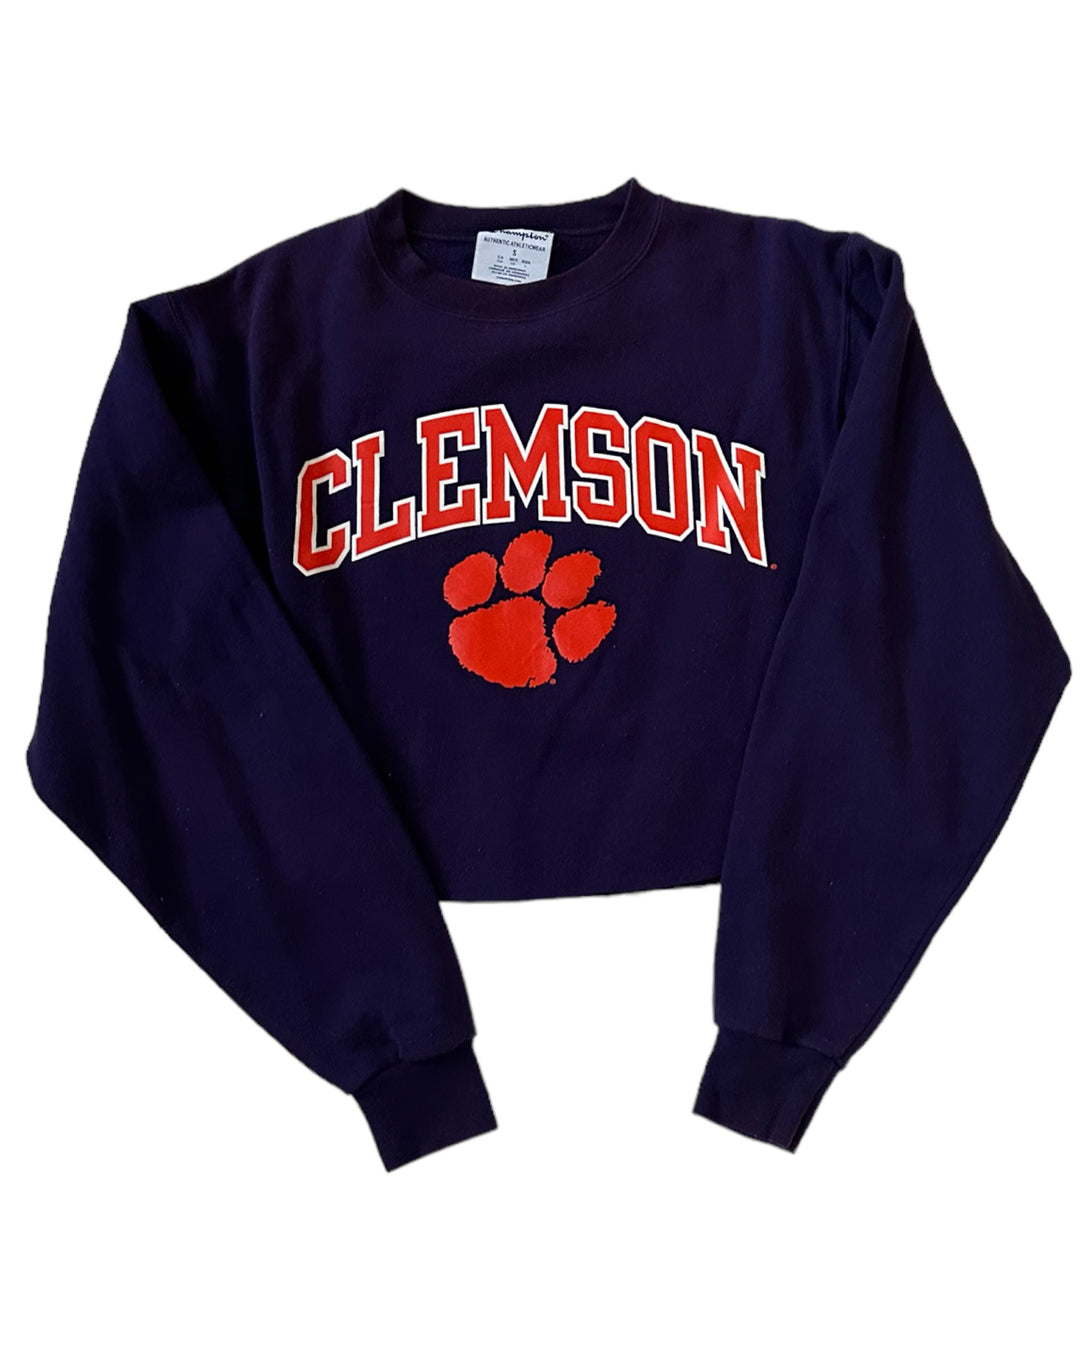 Clemson Vintage Cropped Sweatshirt